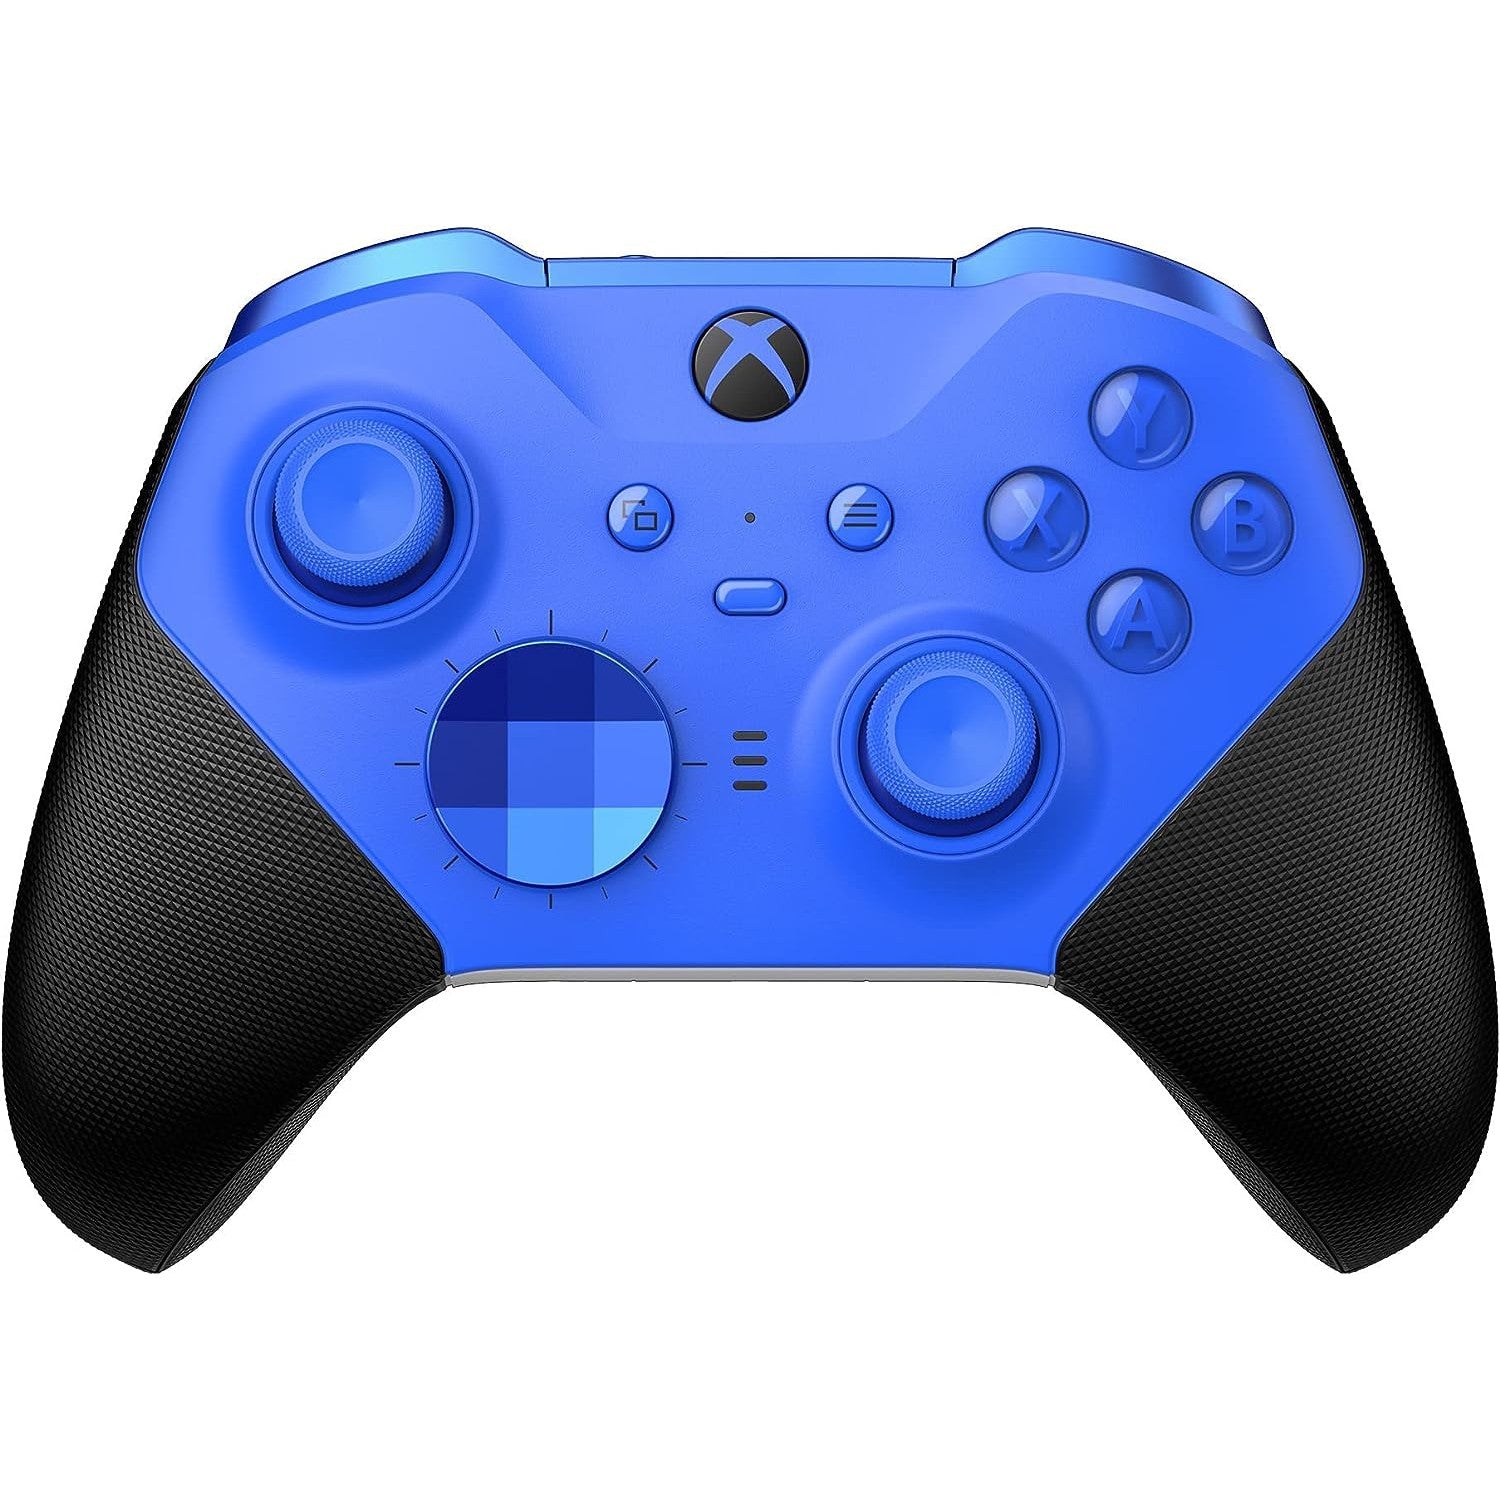 Microsoft Elite Series 2 Core Wireless Controller - Blue